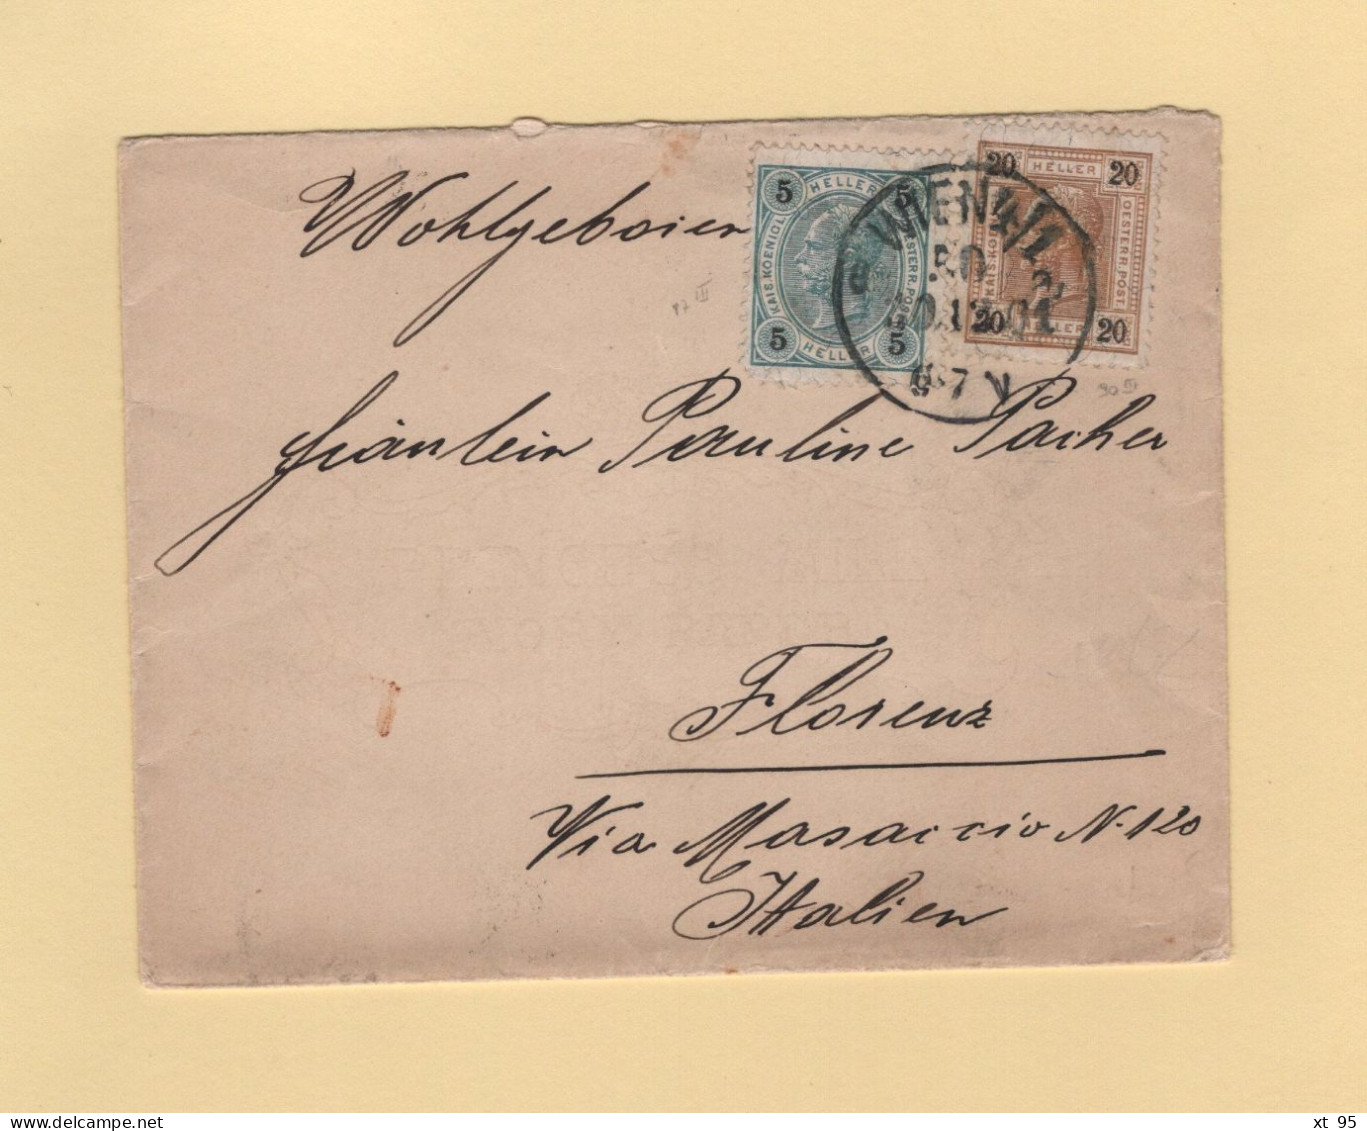 Autriche - Wien - 1901 - Destination Italie - Briefe U. Dokumente